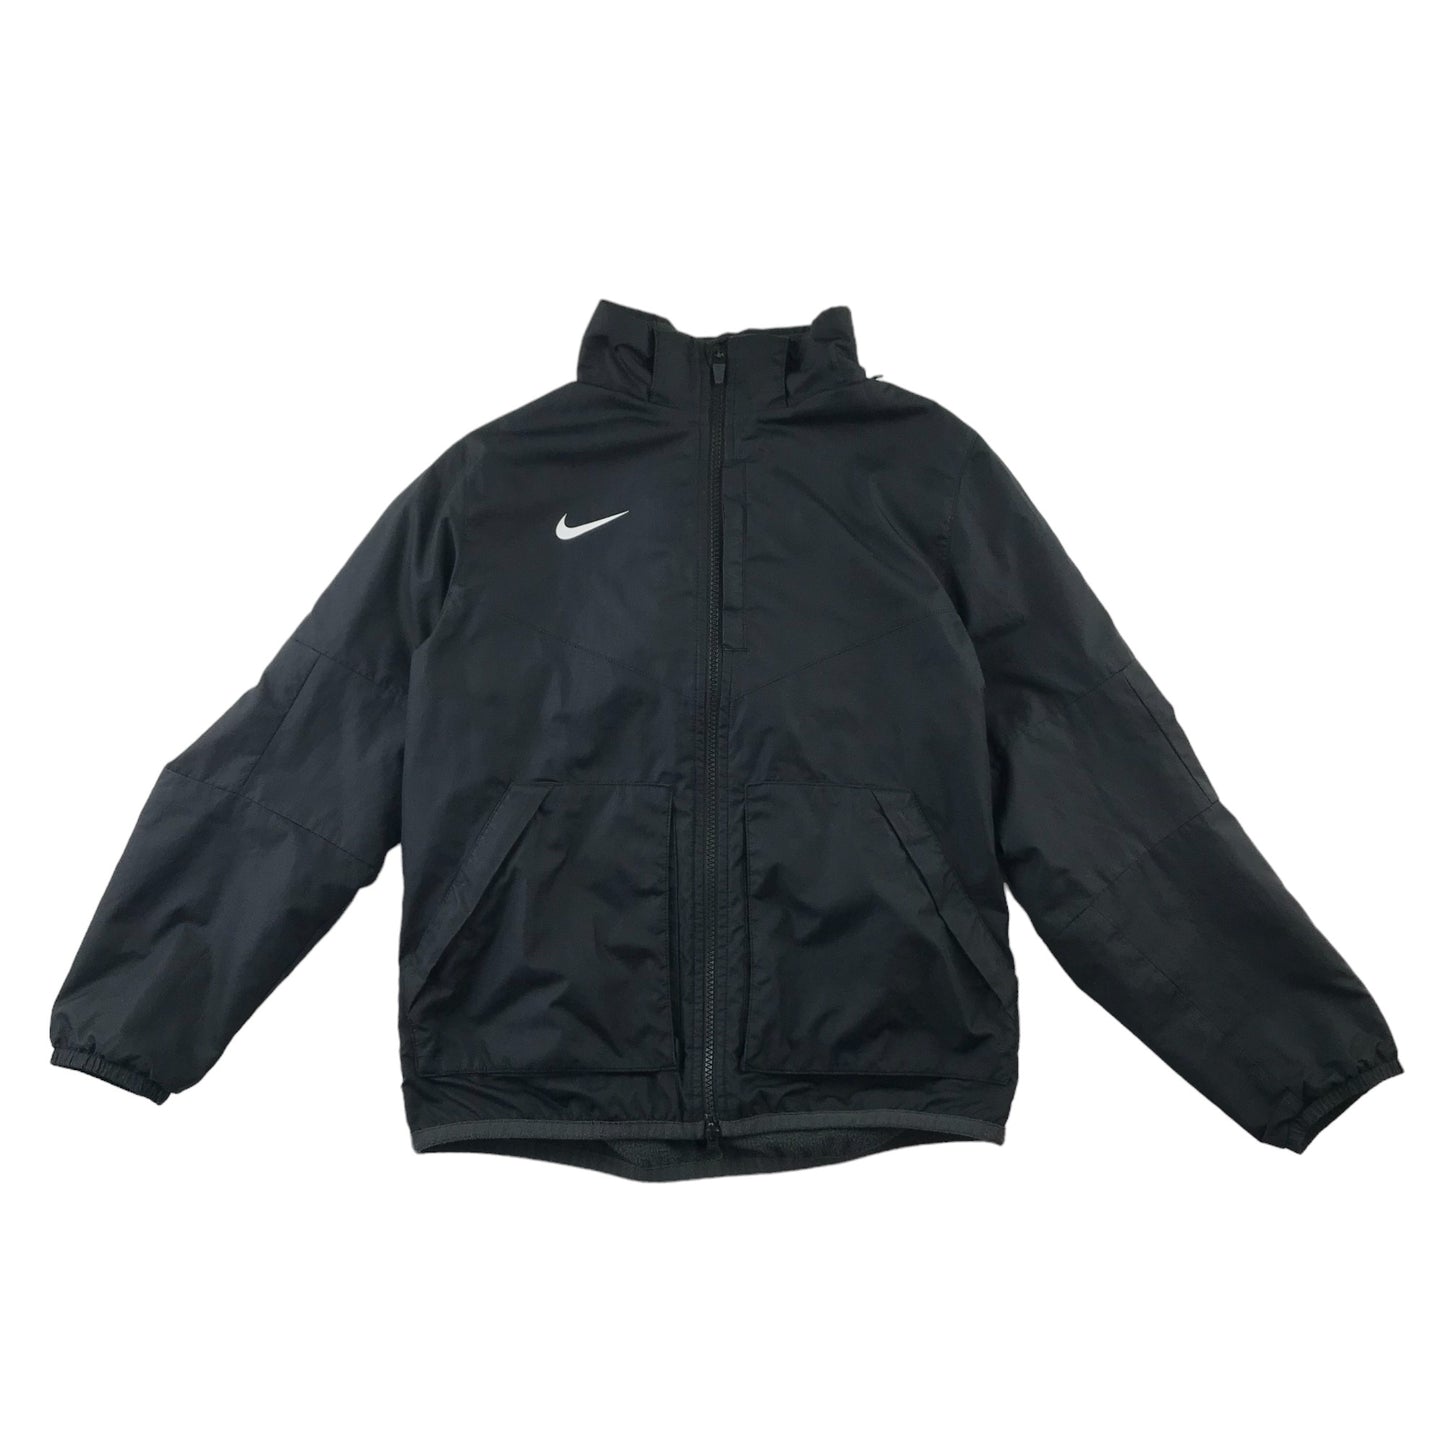 Nike light jacket 9-10 years black hooded with fleece lining